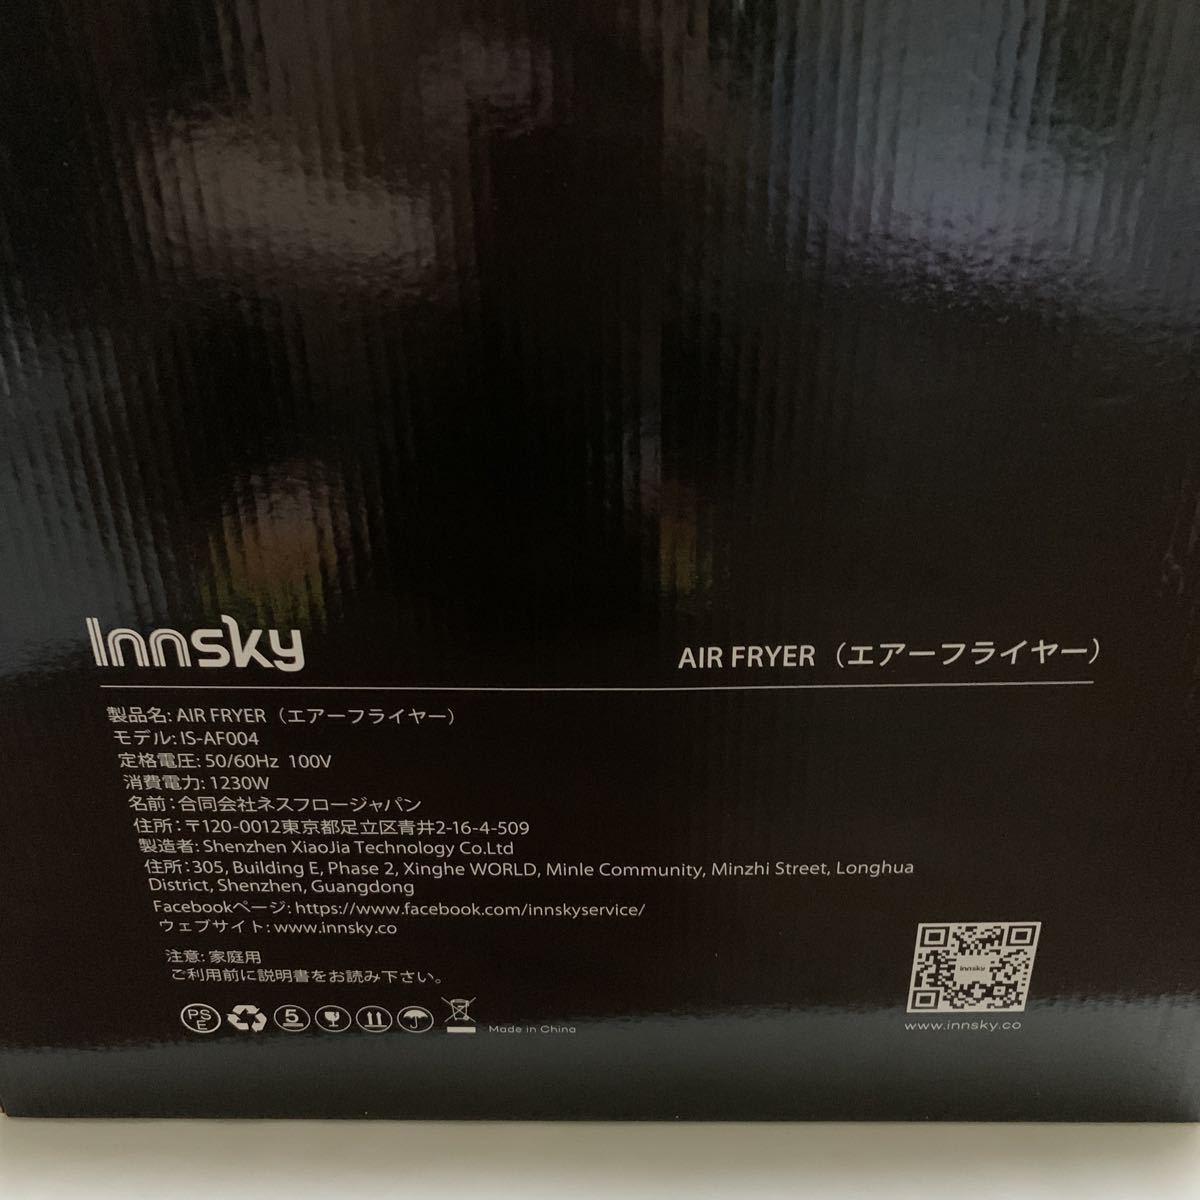 Innsky ノンフライヤー 3 5l 電気フライヤー エアーフライヤー 調理器具 売買されたオークション情報 Yahooの商品情報をアーカイブ公開 オークファン Aucfan Com